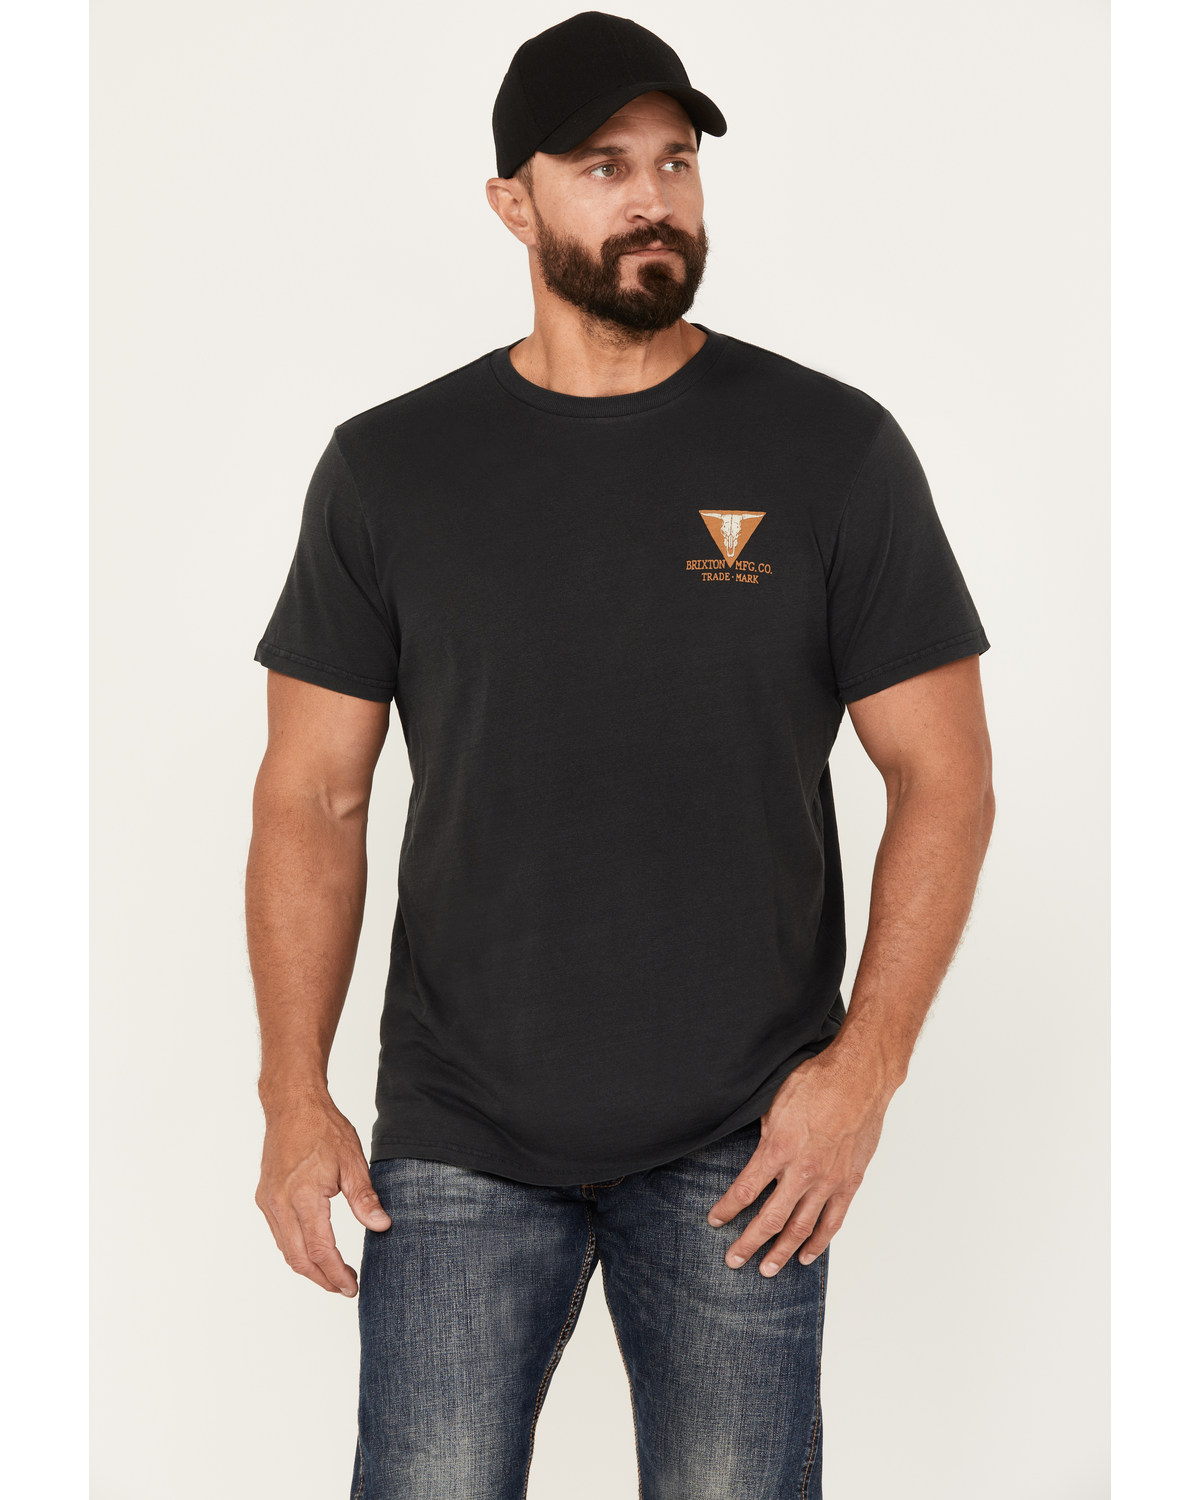 Brixton Men's Welton Short Sleeve Graphic T-Shirt